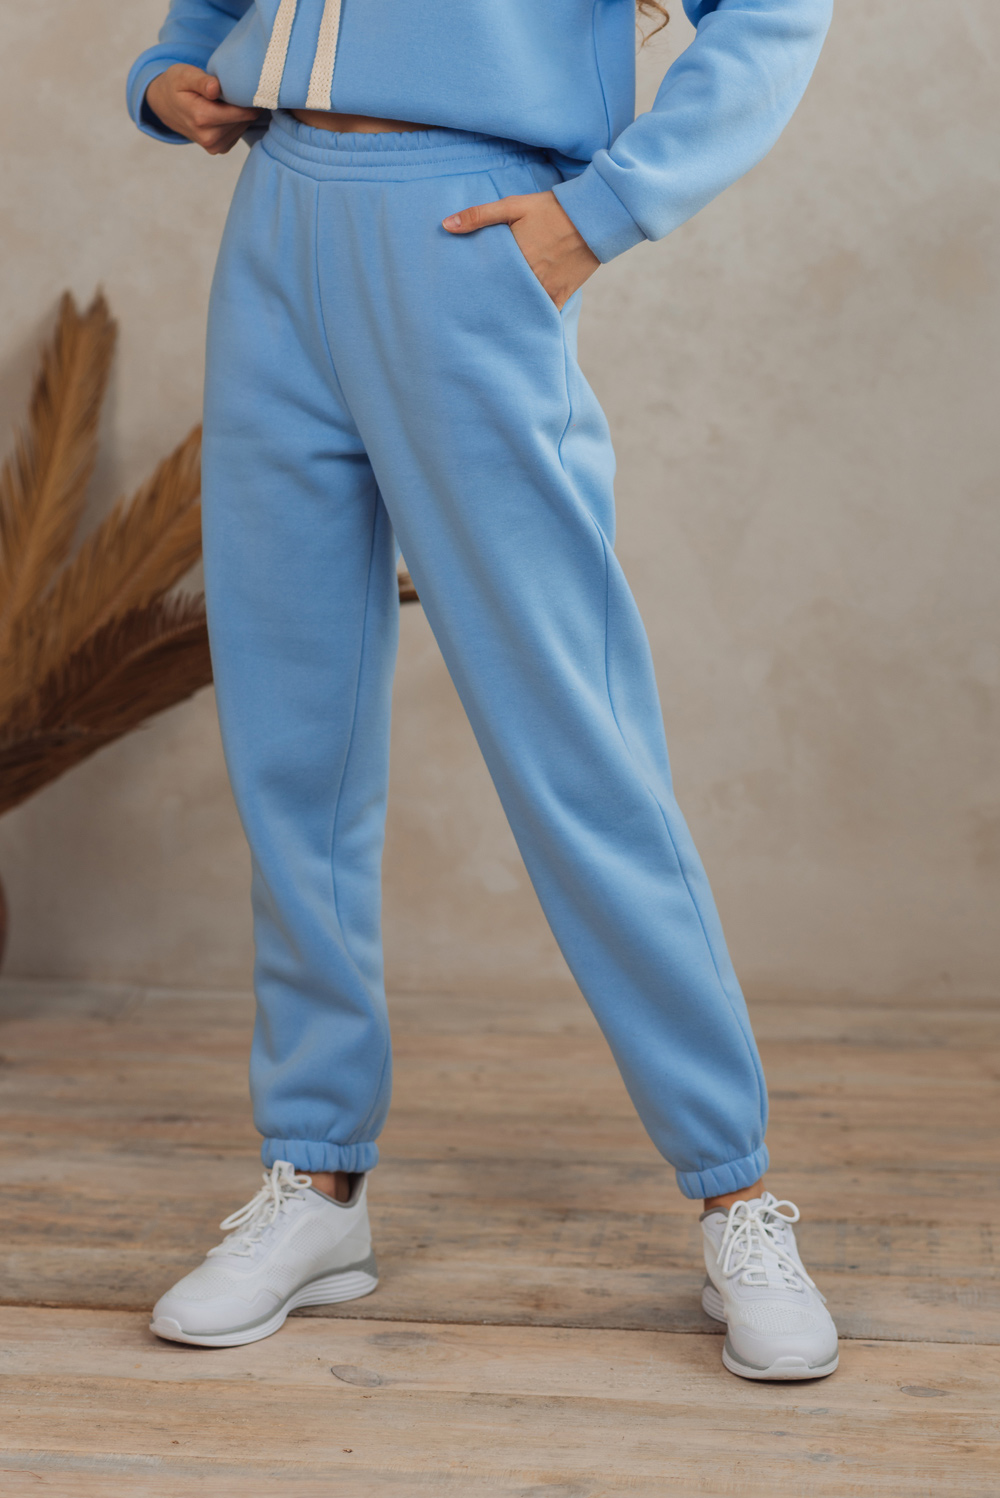 Light blue sweatpants